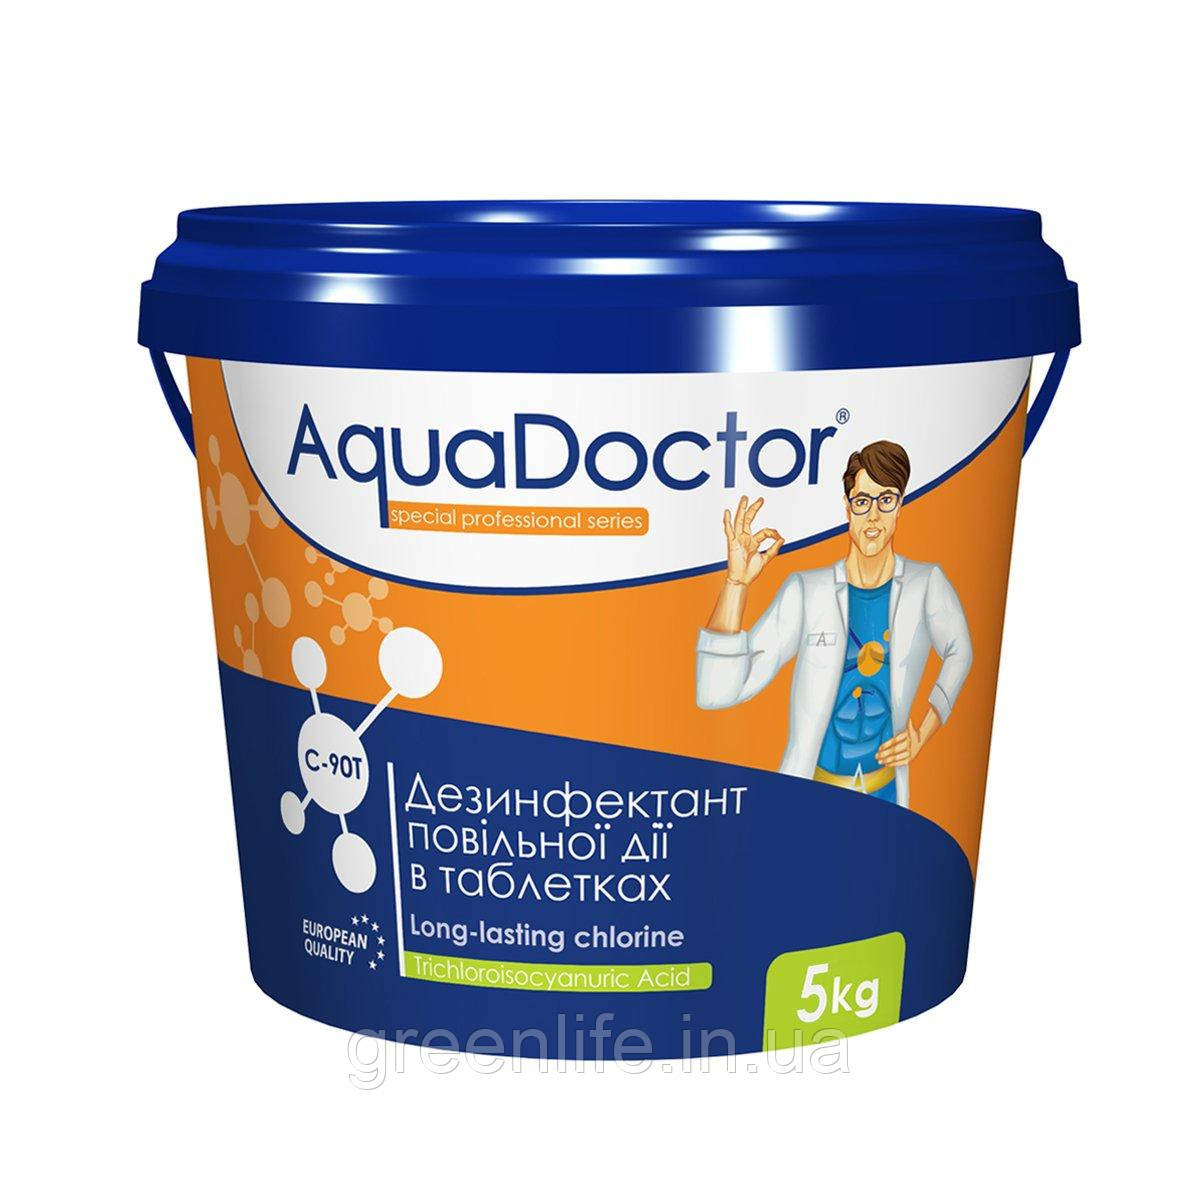 Тривалий хлор у таблетках Aquadoctor C90T (5 кг), Аквадоктор, у таблетках, 5 кг